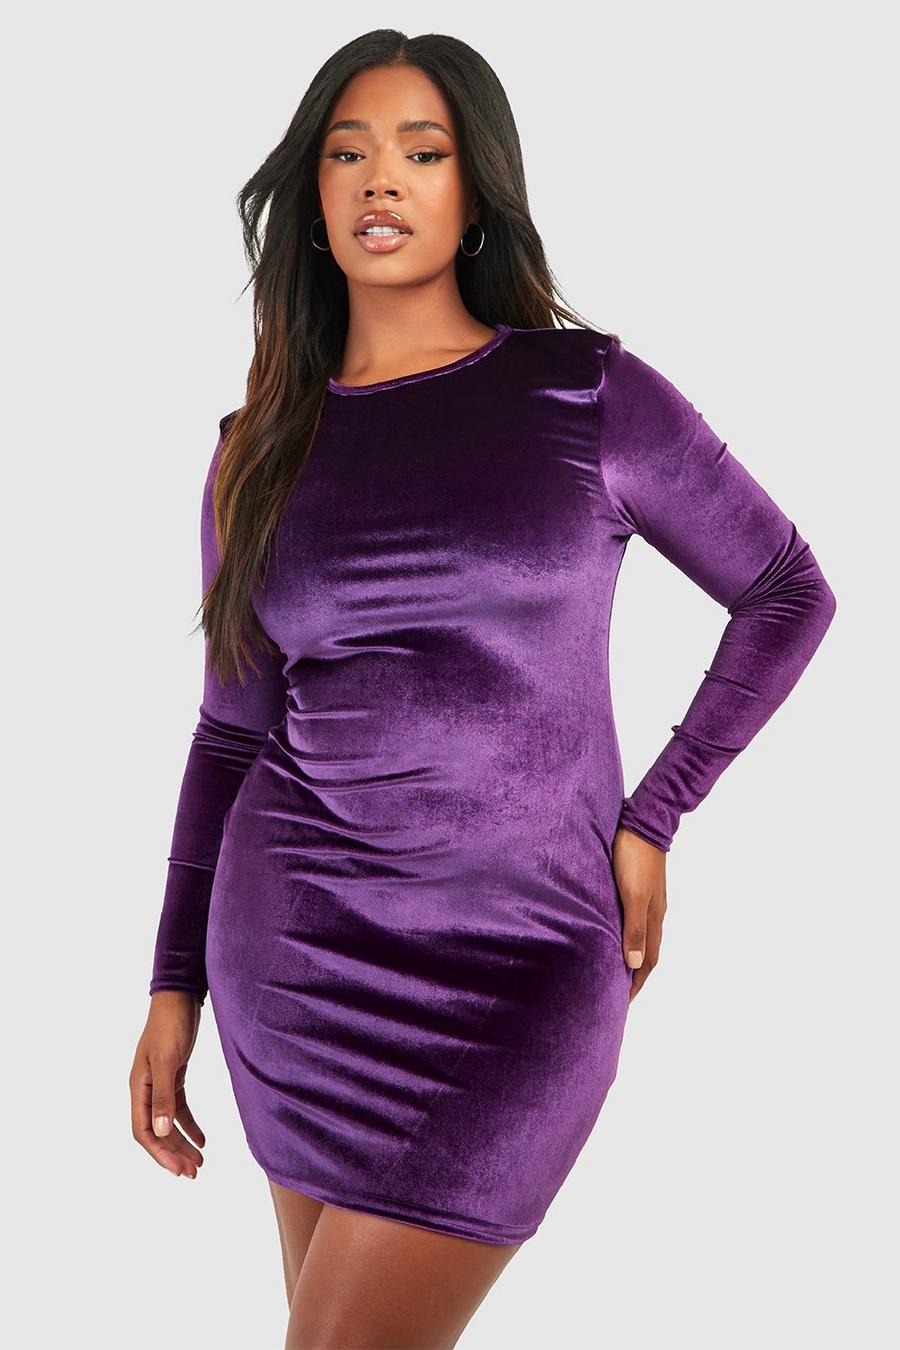 Jewel purple Plus Velvet Long Sleeve Mini Dress